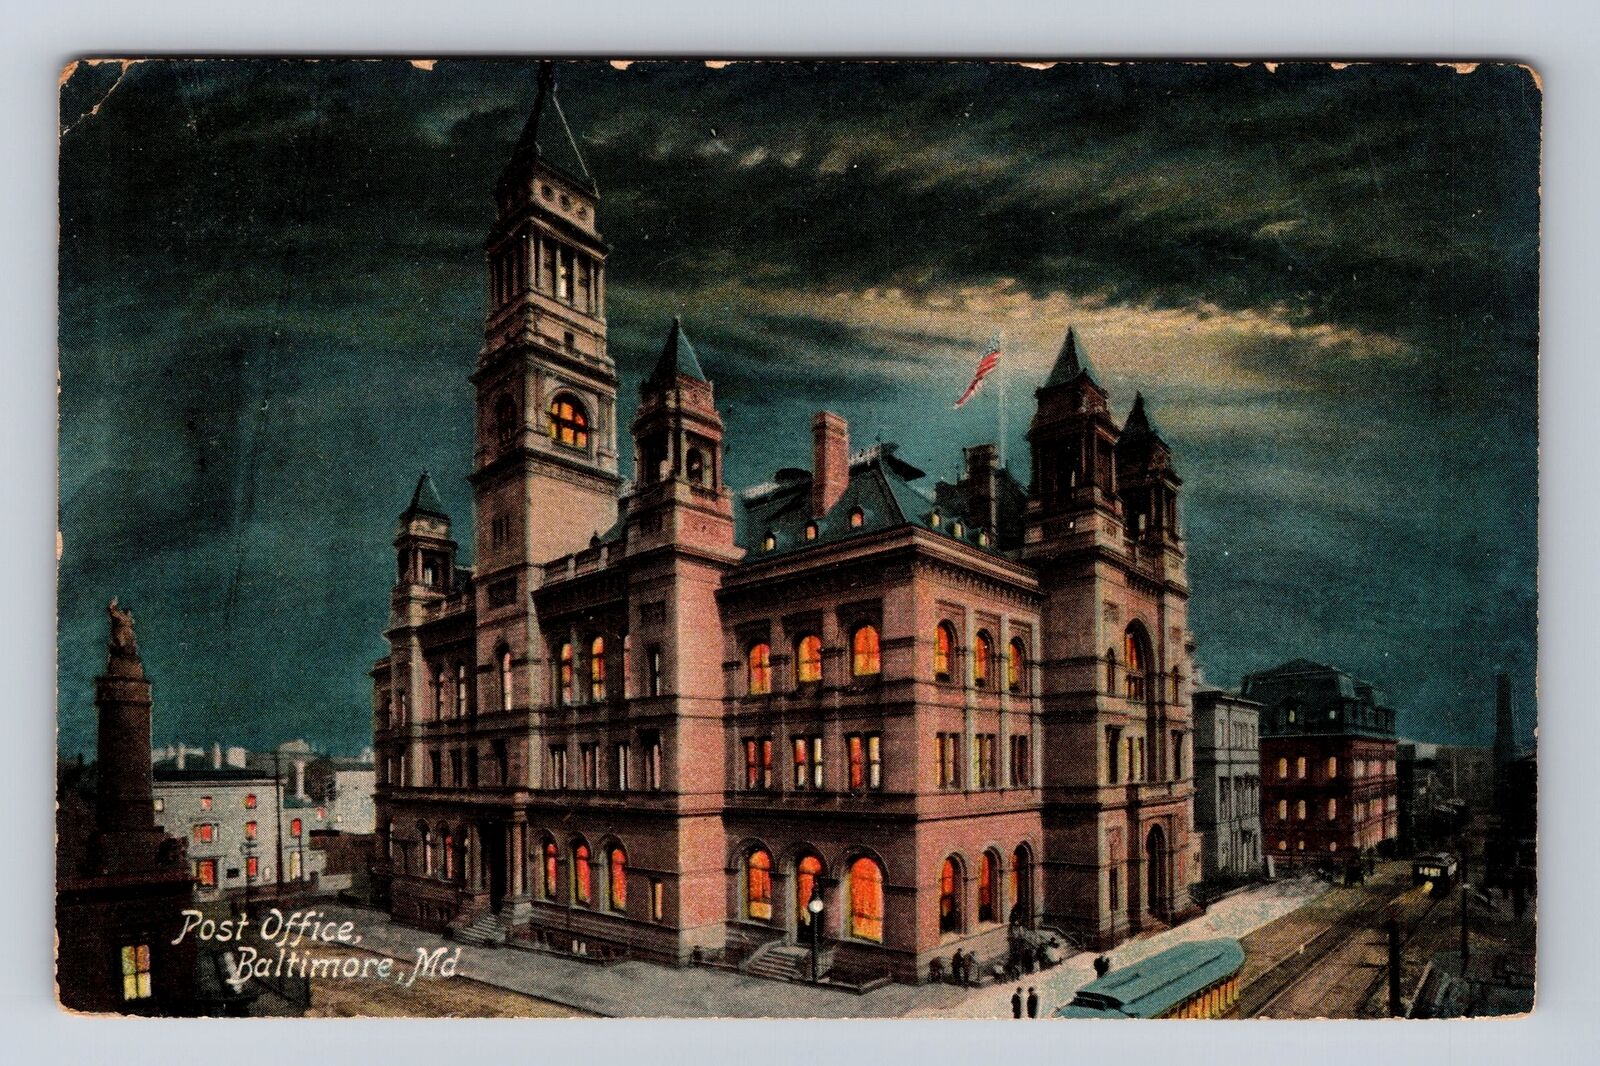 Baltimore MD-Maryland, United States Post Office, Antique Vintage c1909 Postcard